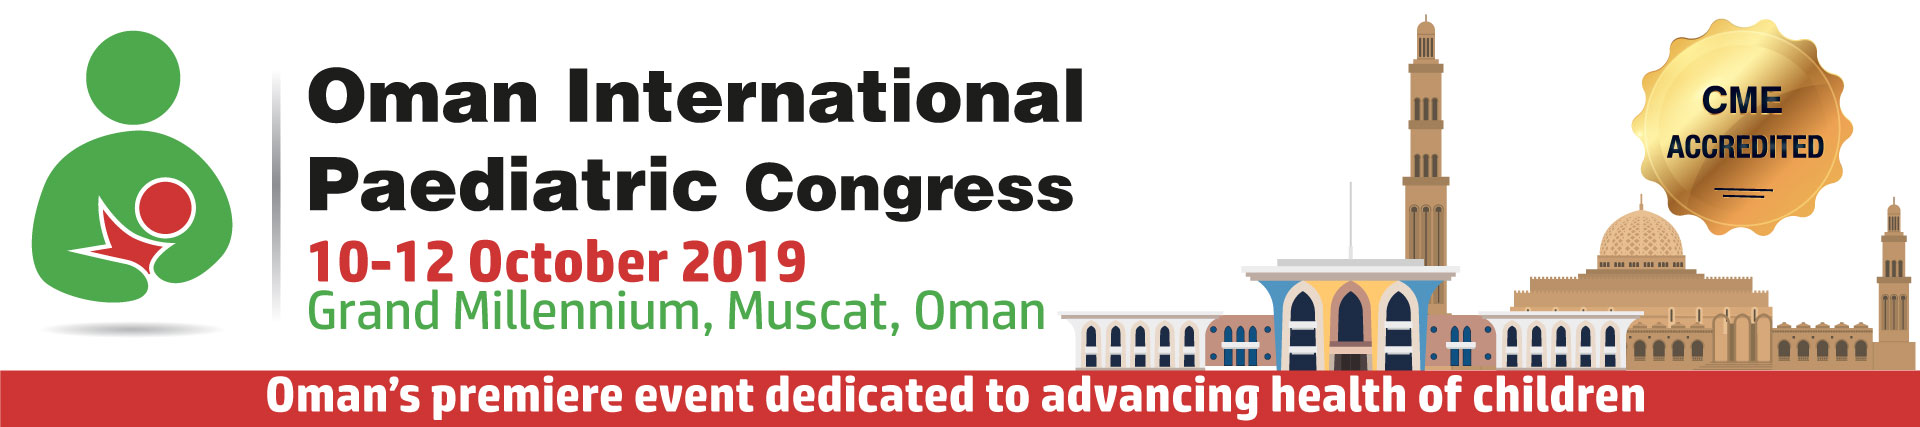 Oman International Paediatric Congress, Muscat, Oman